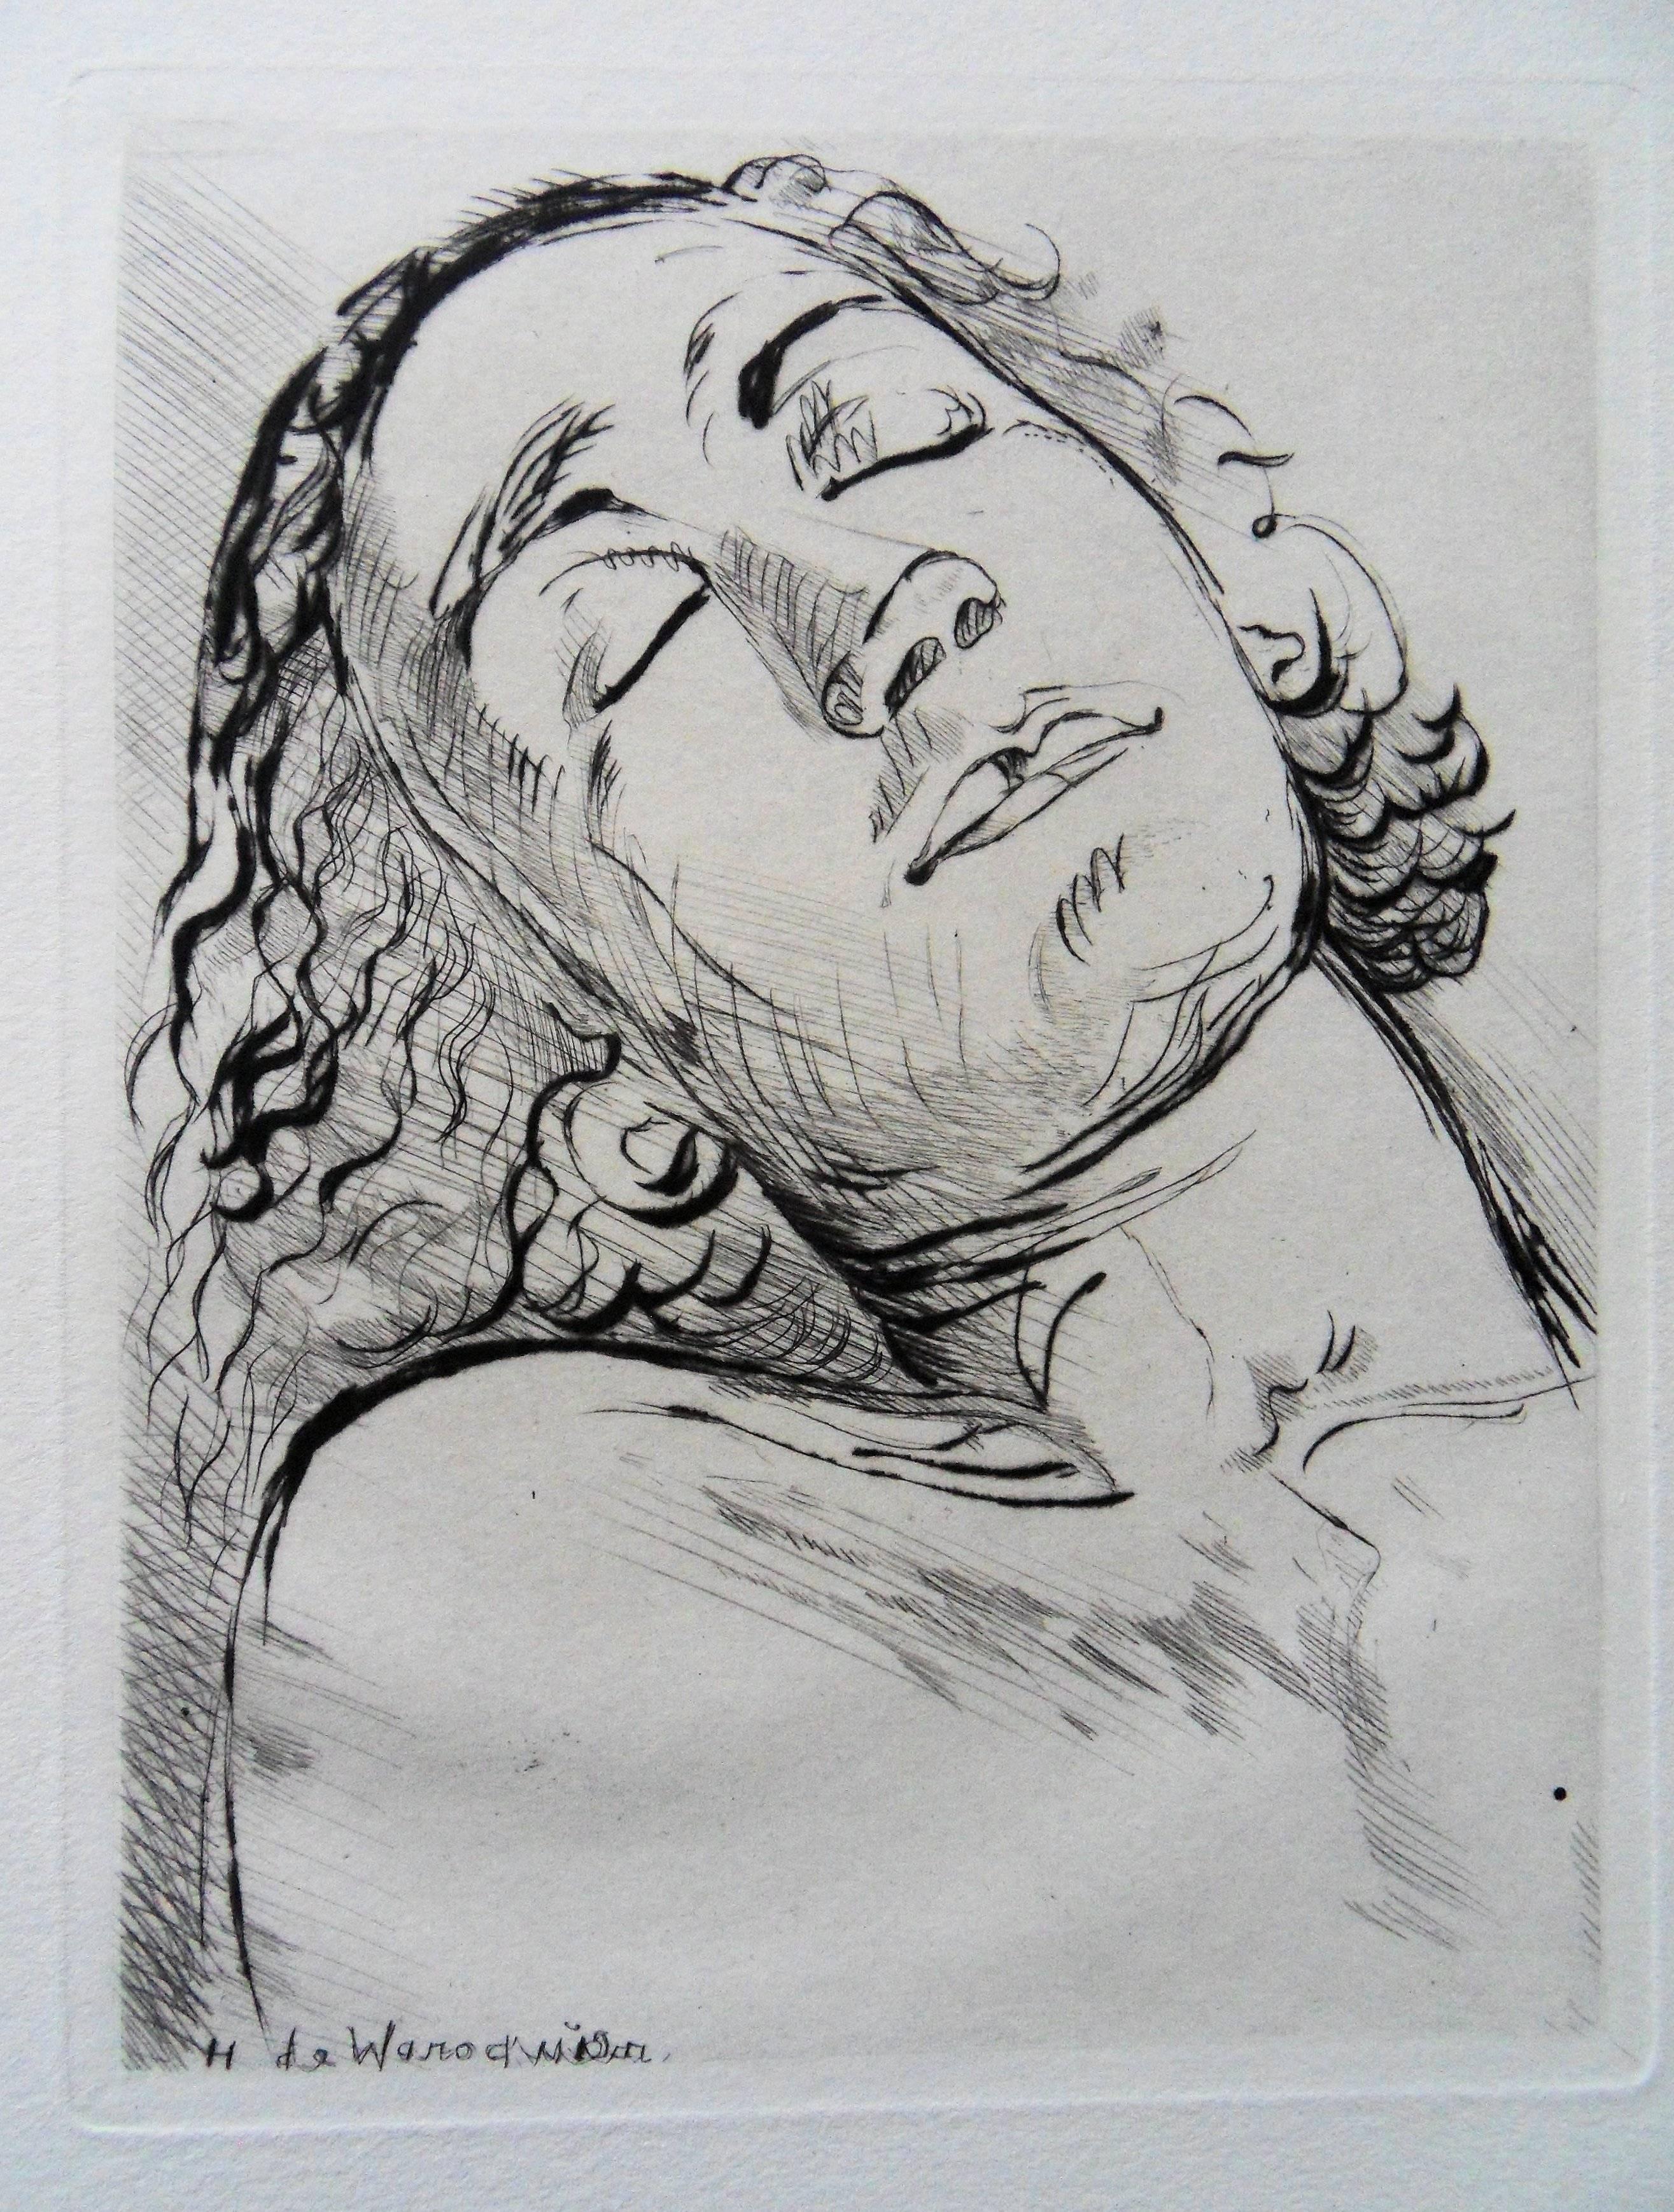 Henry de Waroquier Figurative Print - Portrait of a Dreamer - Original etching, 1943